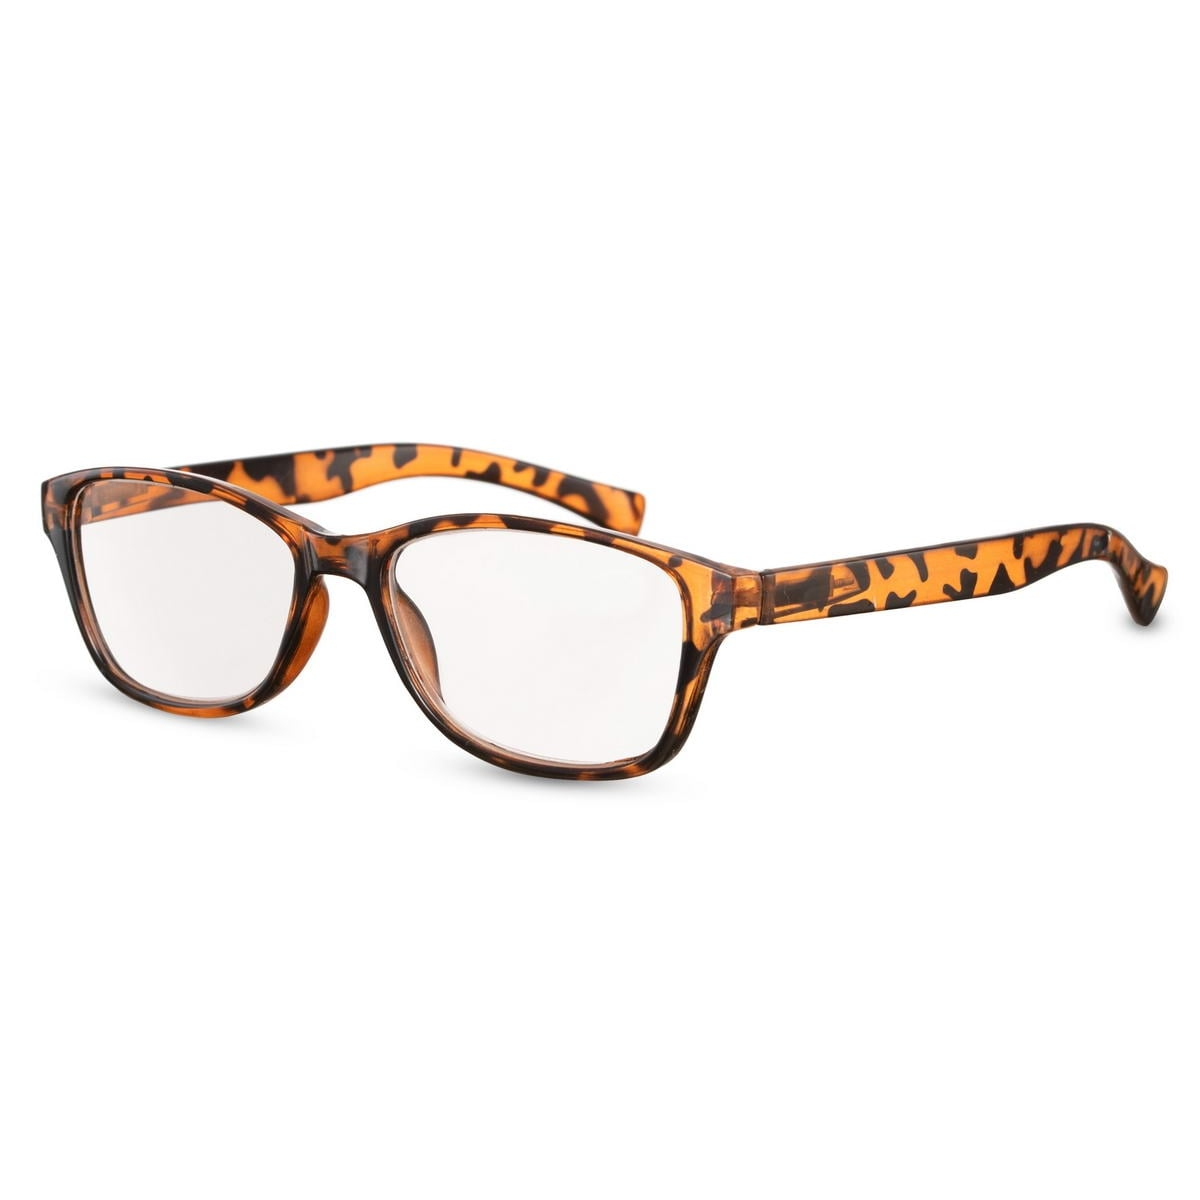 Dioptrické brýle Solo Tiger - hnědé